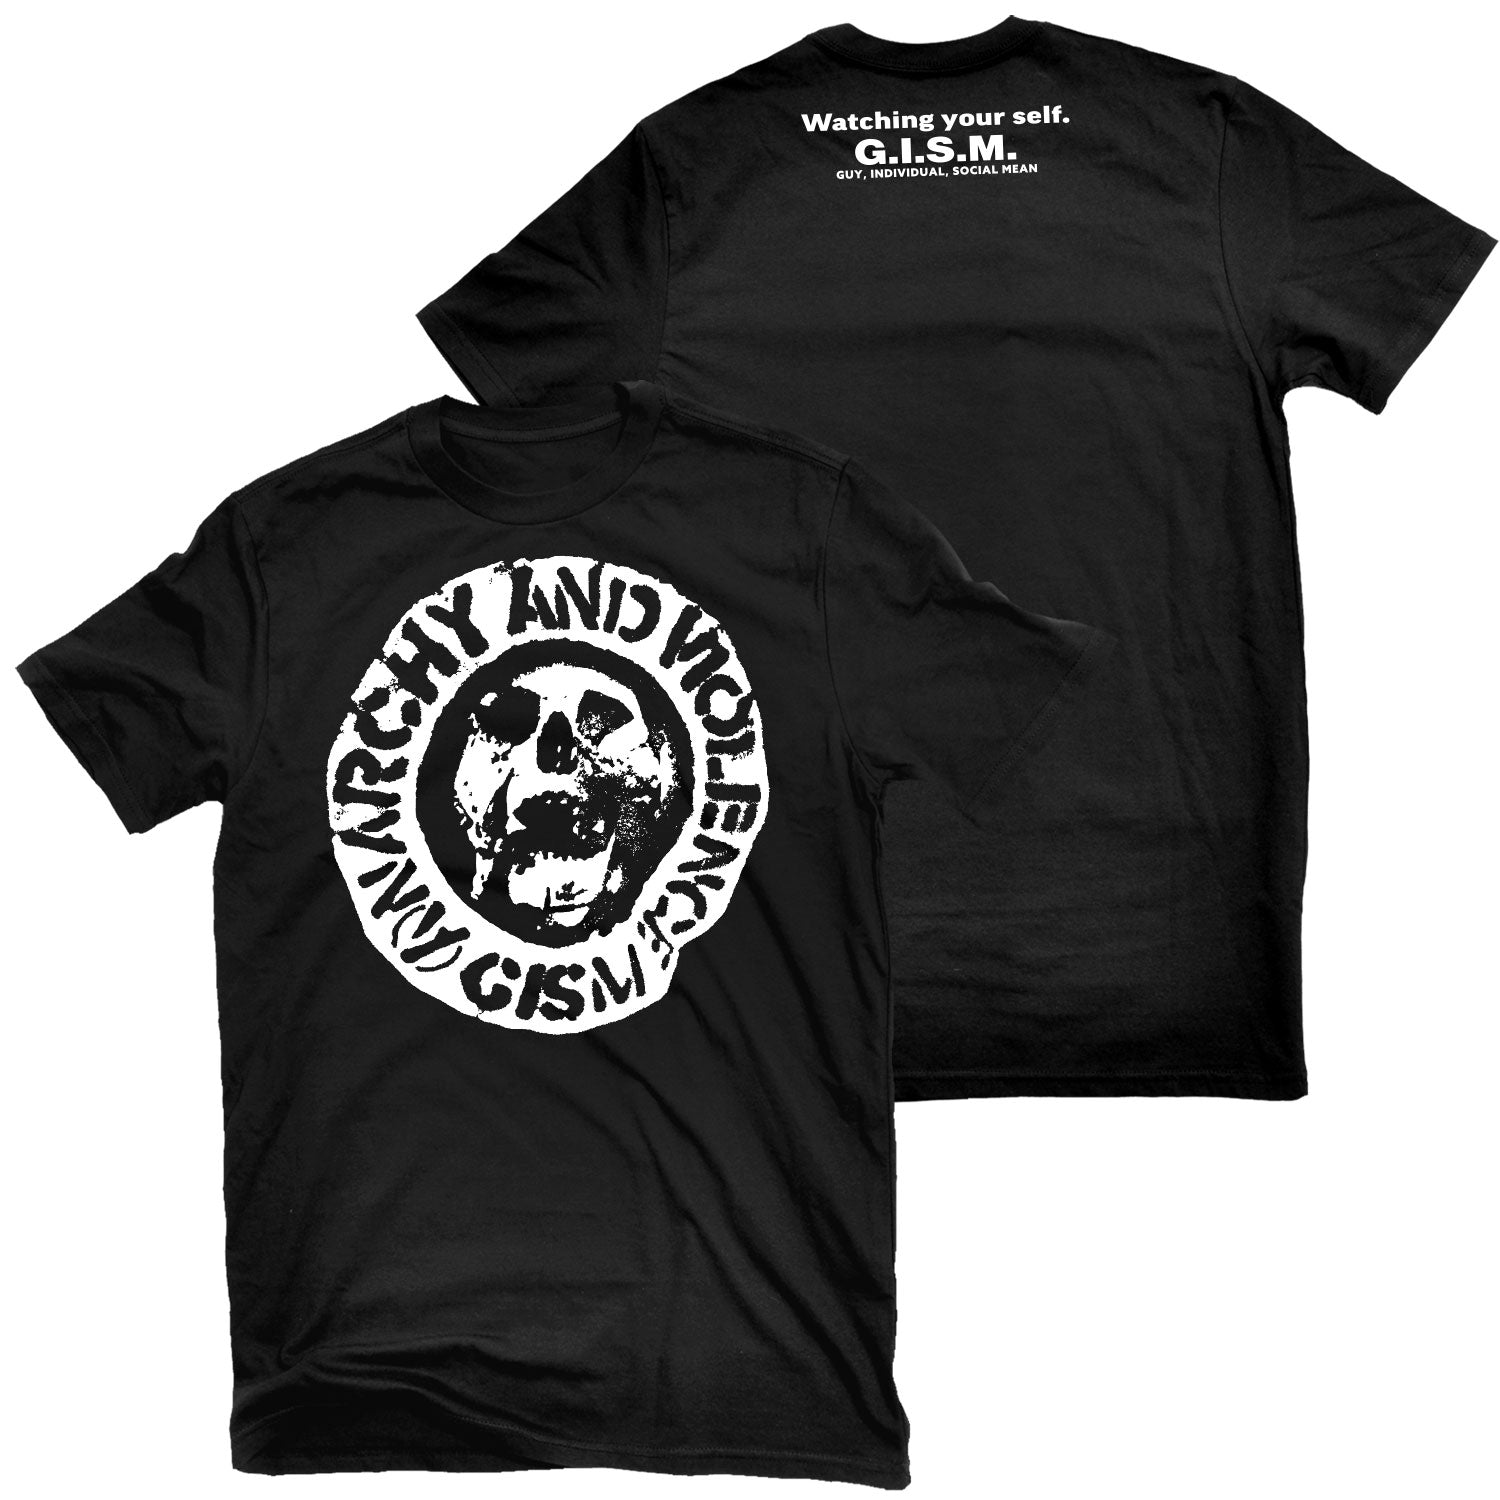 GISM "Anarchy and Violence" T-Shirt